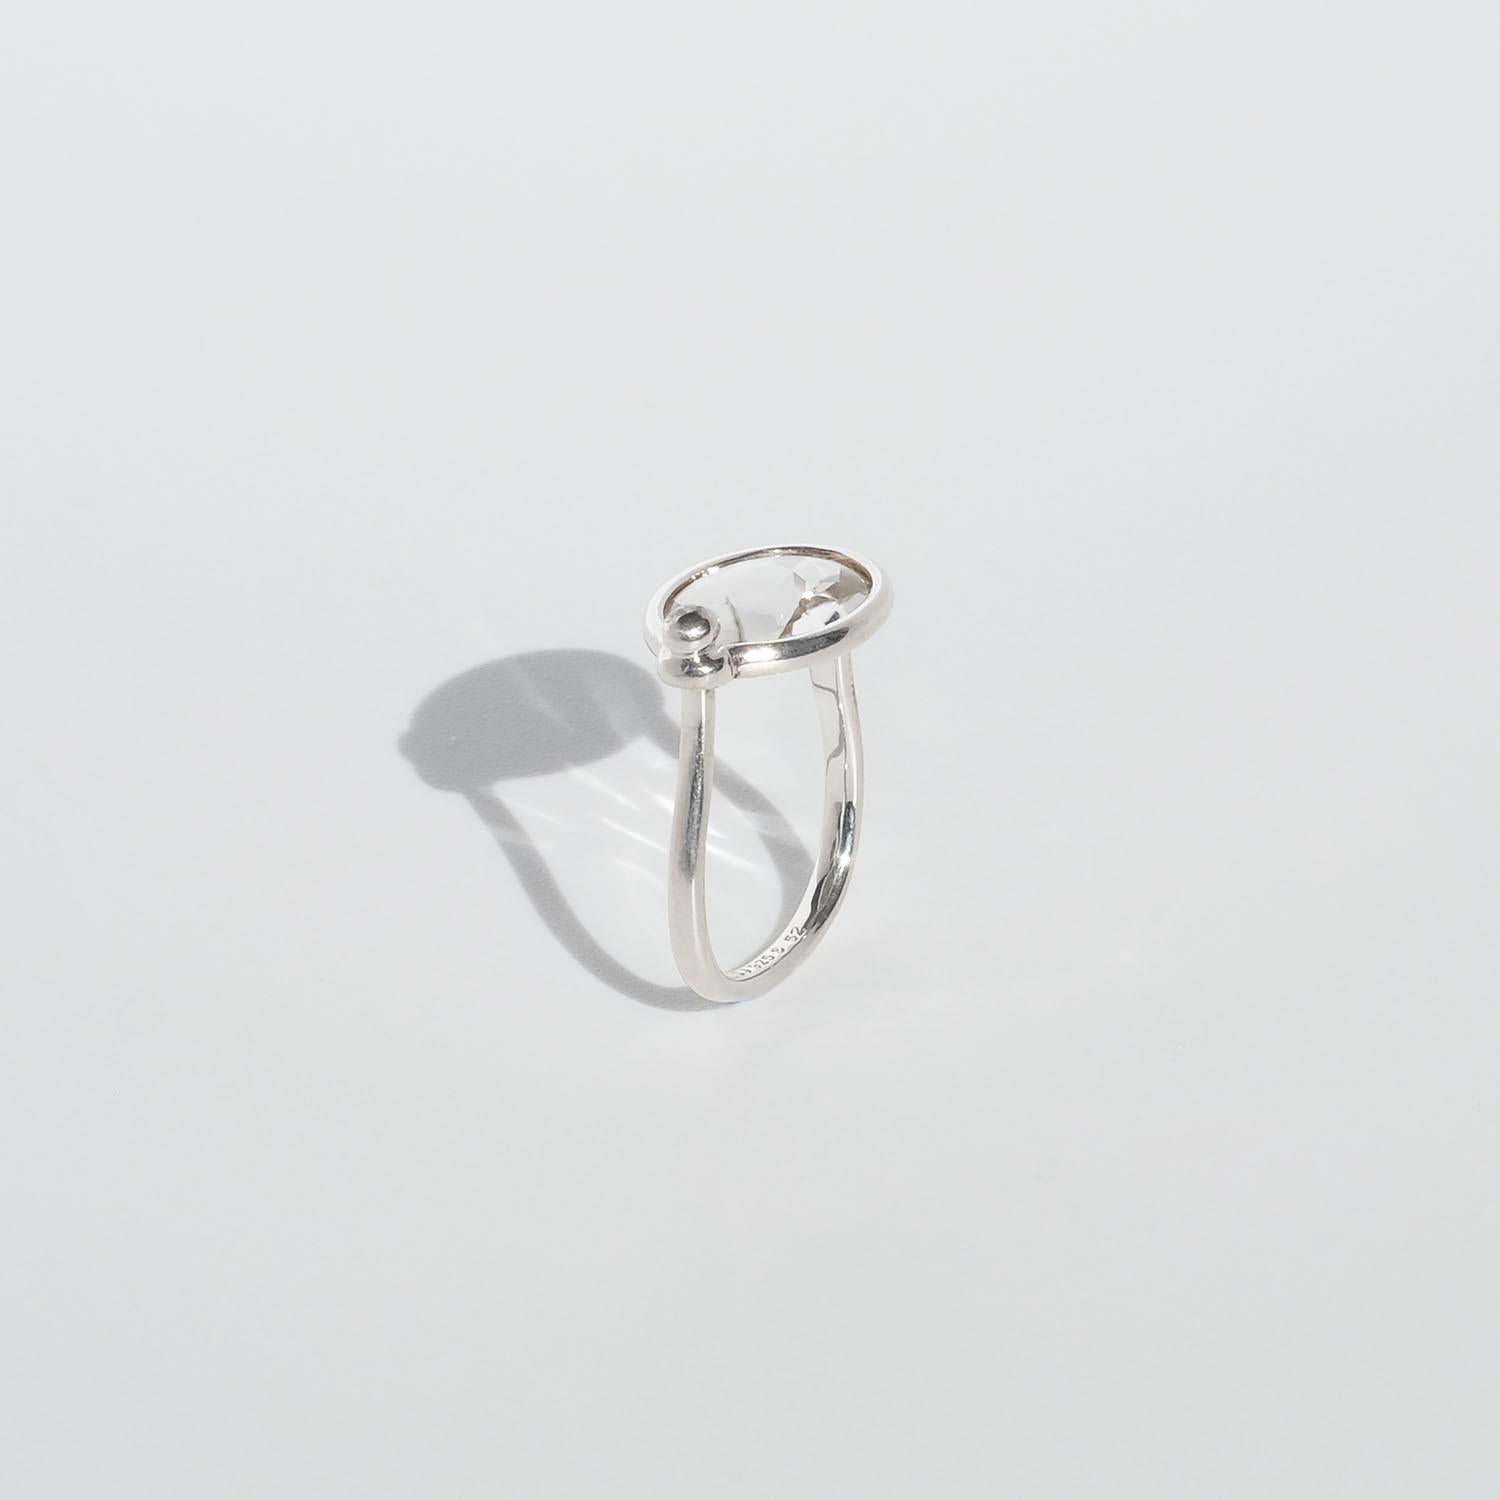 Silver and Rock Crystal Ring by Vivianna Torun Bülow-Hübe for Georg Jensen 3